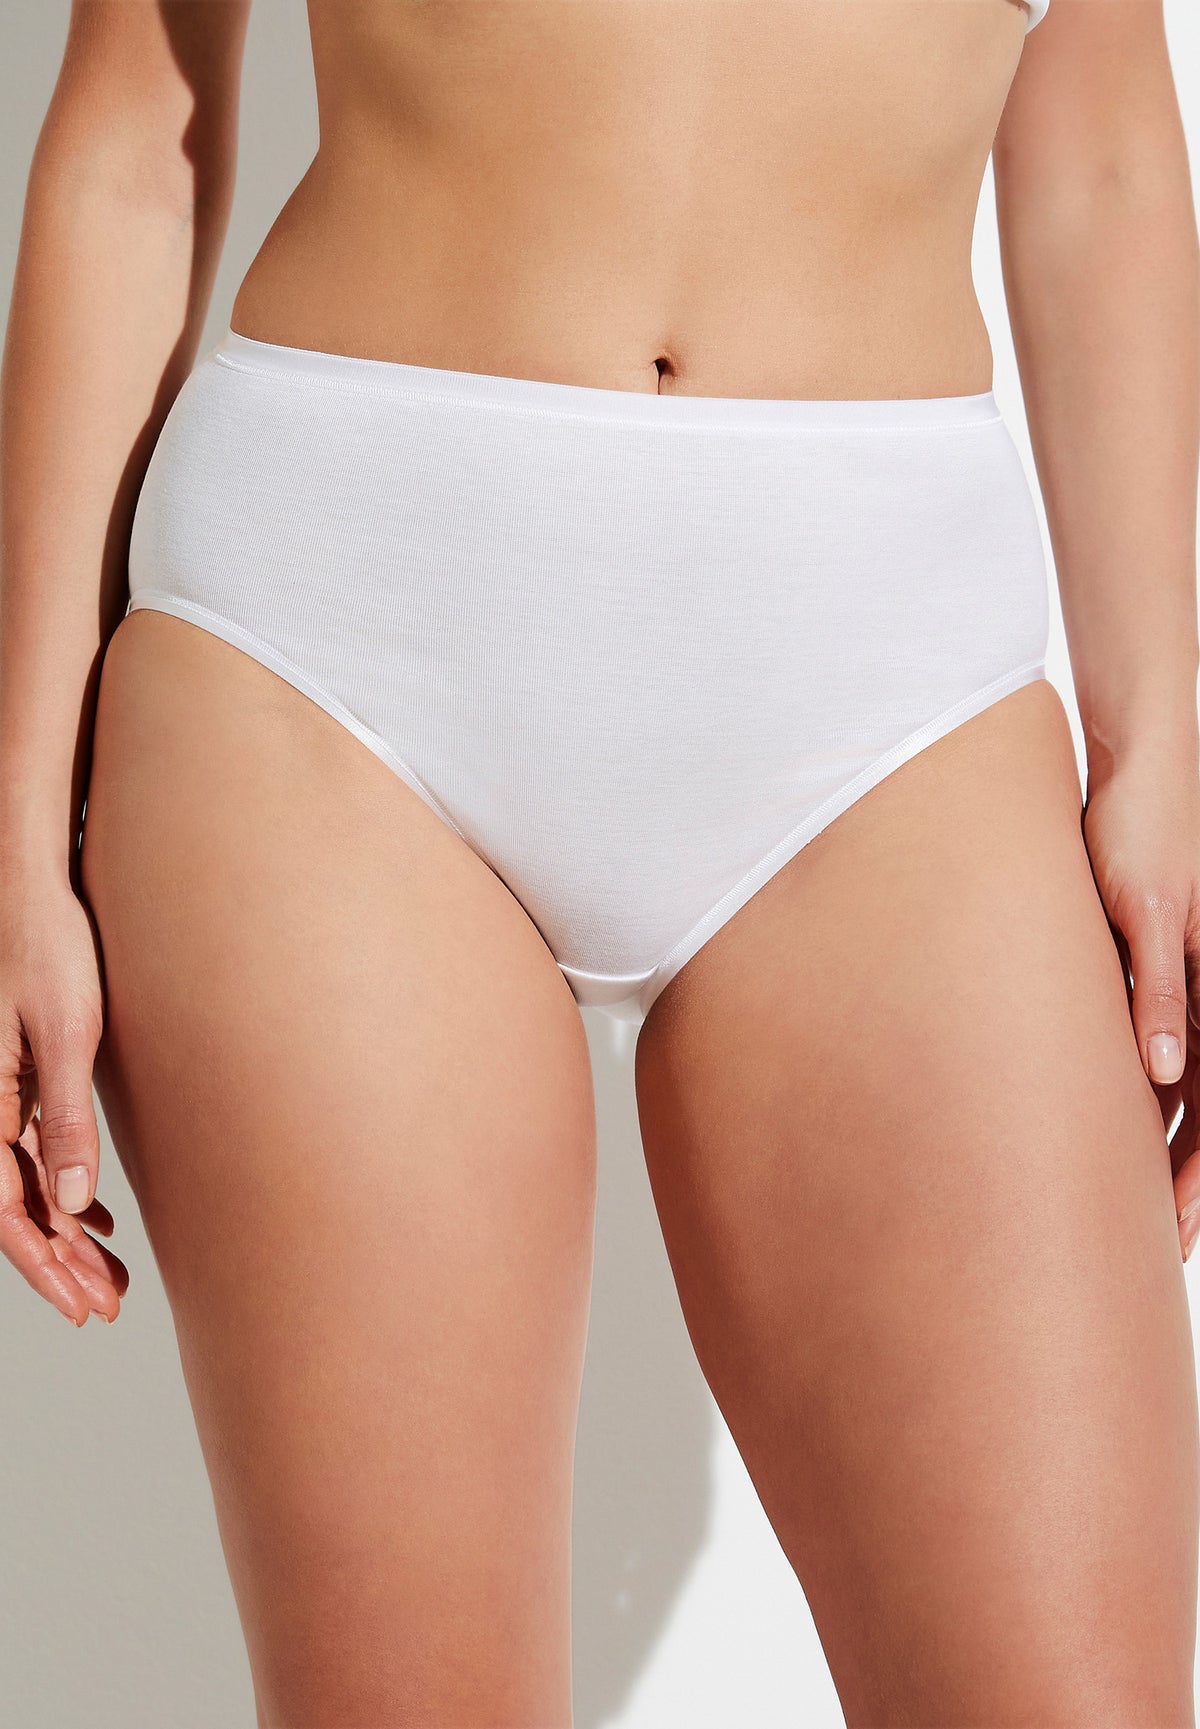 Hanro Women's Cotton Seamless Full Brief Panty, Black, X-Small at   Women's Clothing store: Briefs Underwear